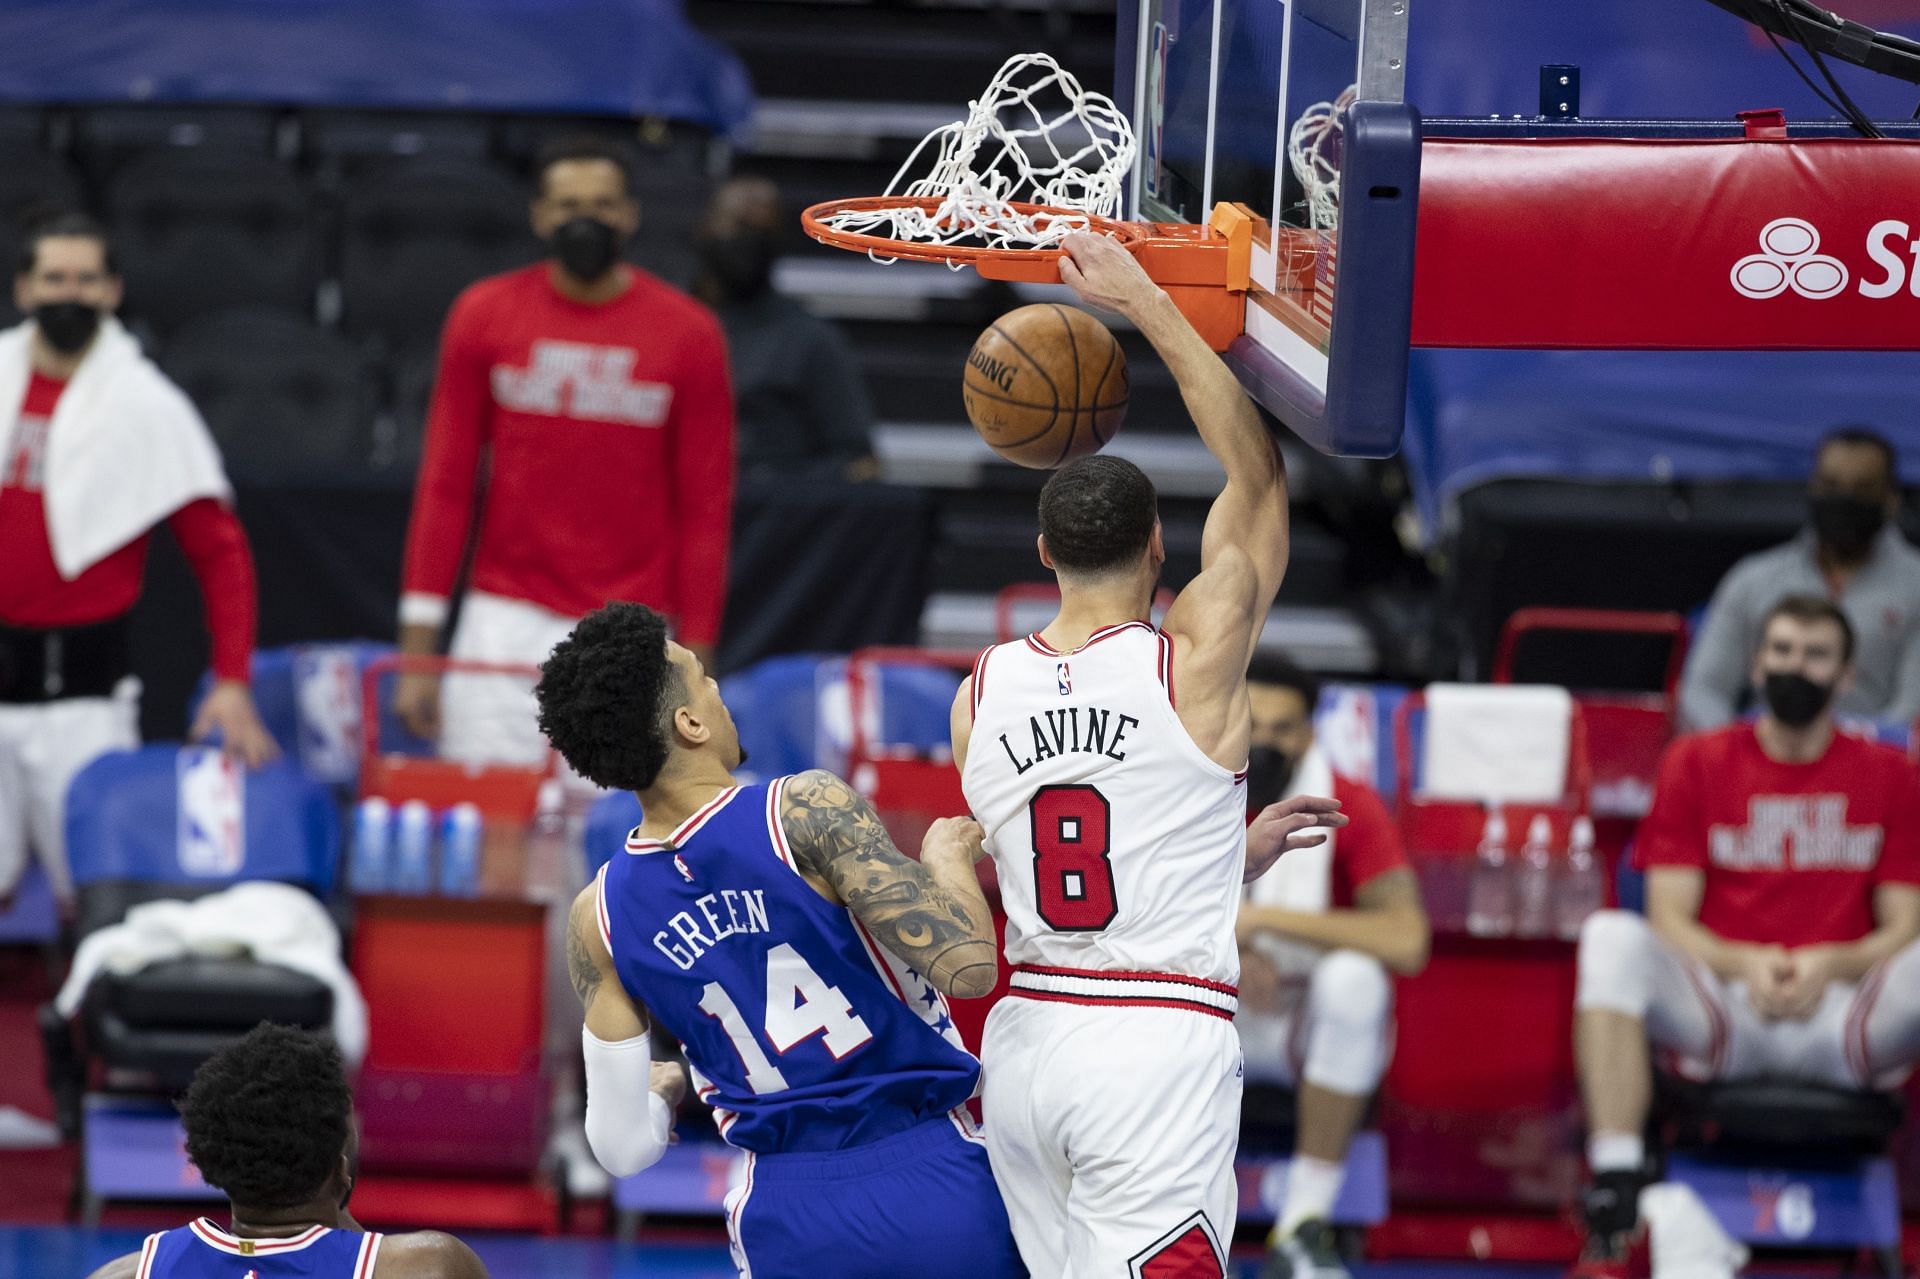 Chicago Bulls will play against the Philadelphia 76ers on Wednesday.